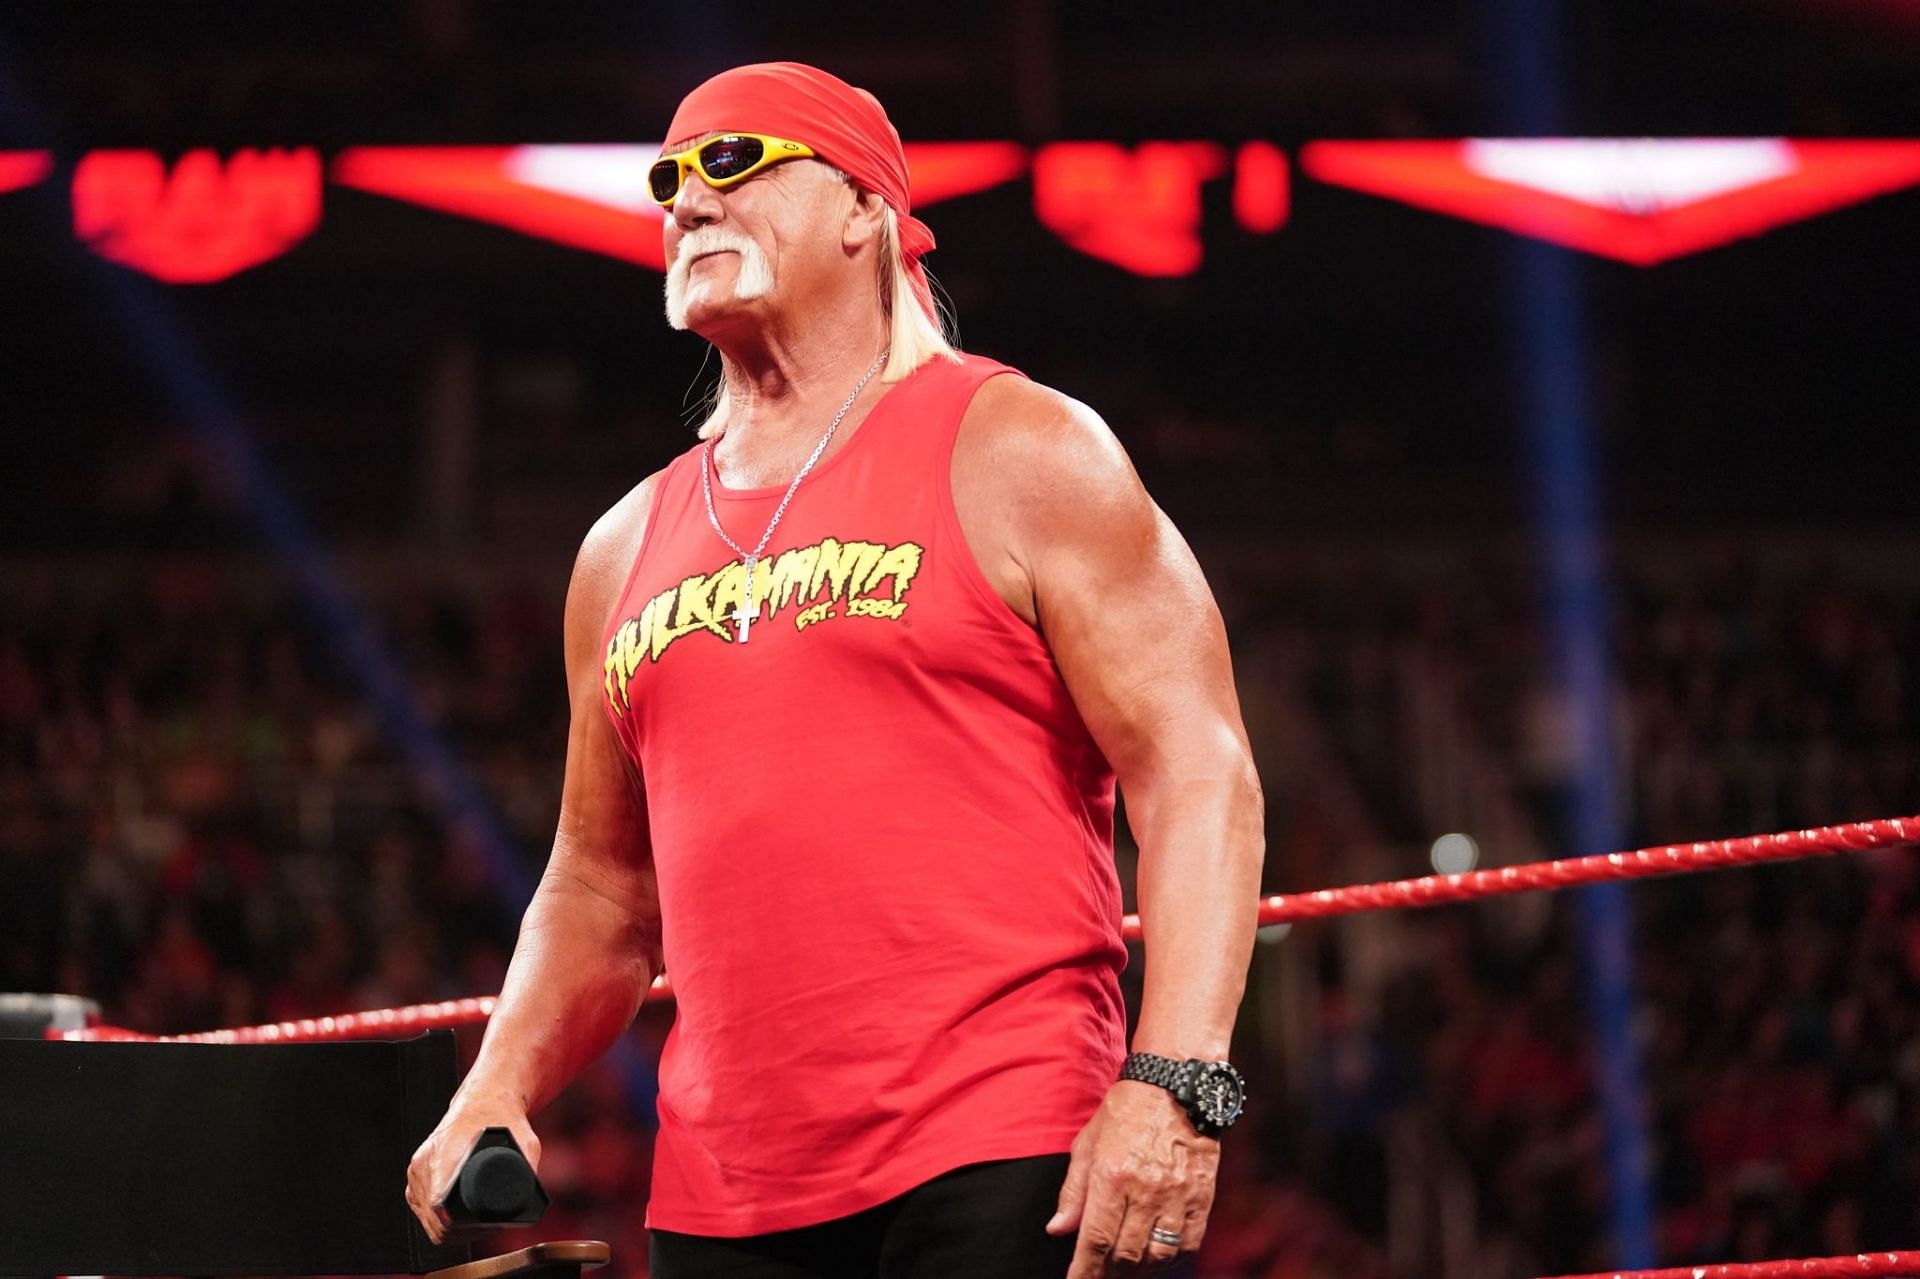 Hulk Hogan has undergone multiple surgeries in the past